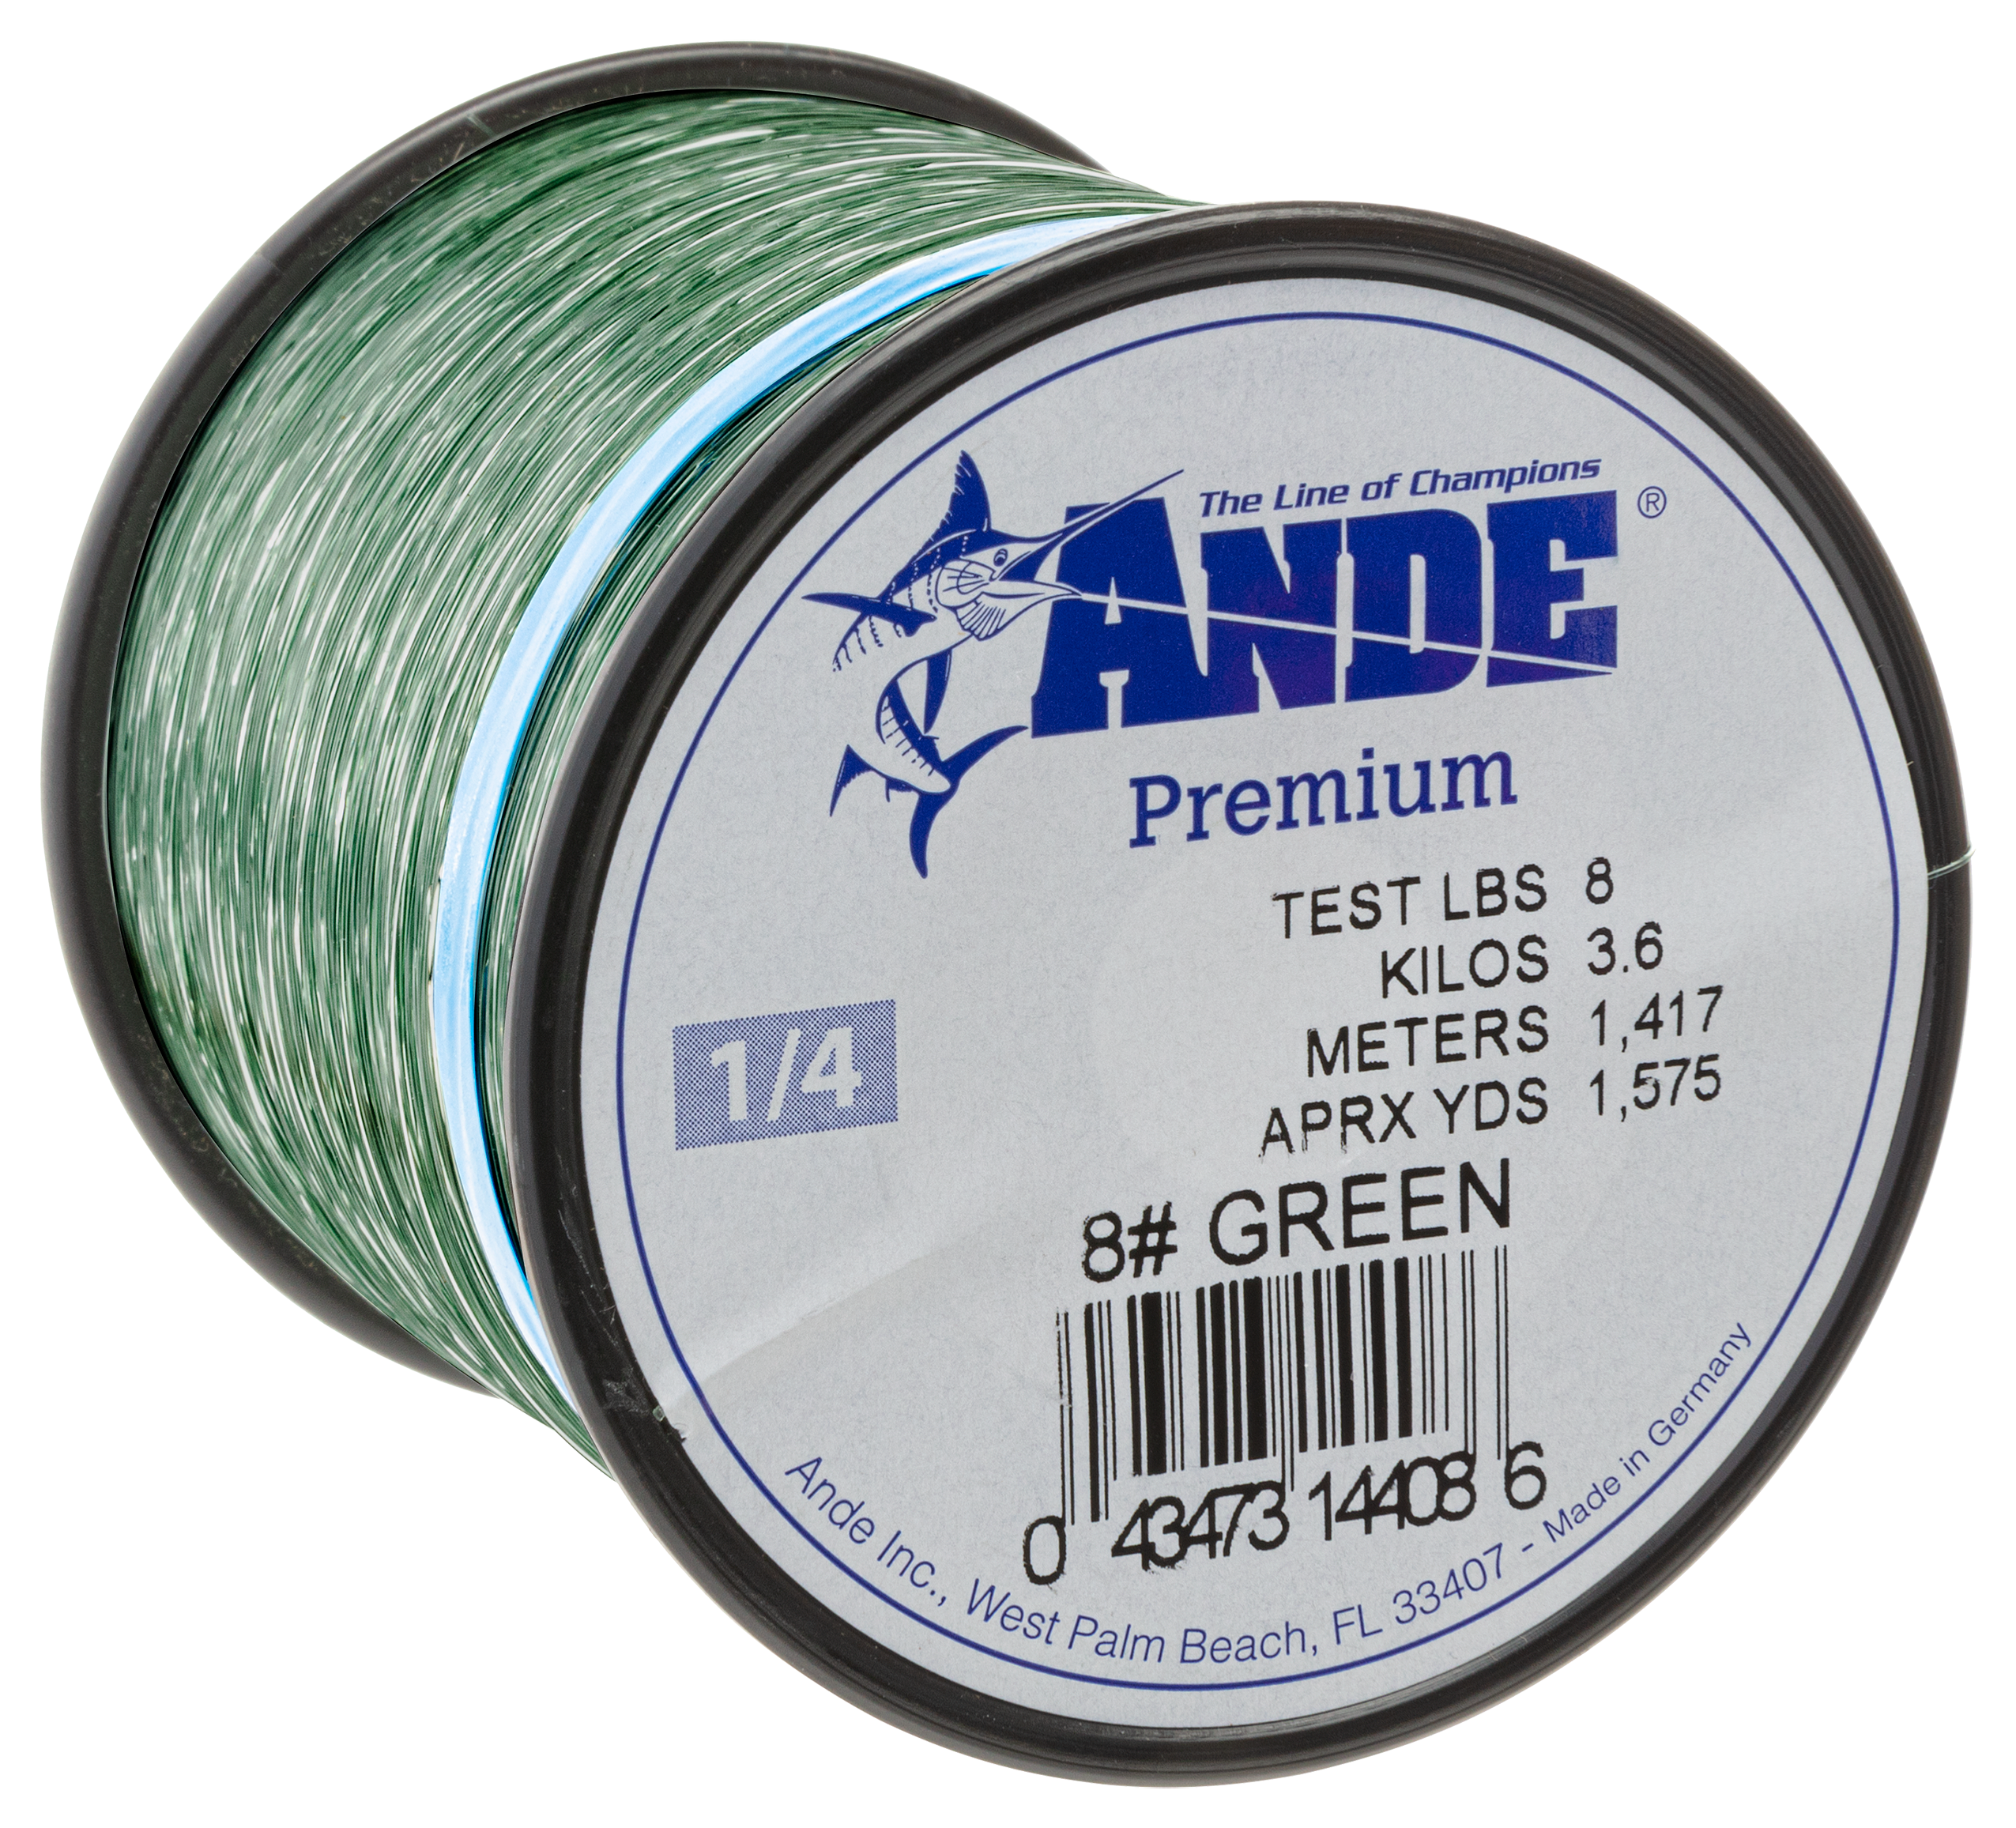  ANDE Monofilament Premium 30lb Test 1/4lb Spool 400yds,Green/Pink  : Monofilament Fishing Line : Sports & Outdoors